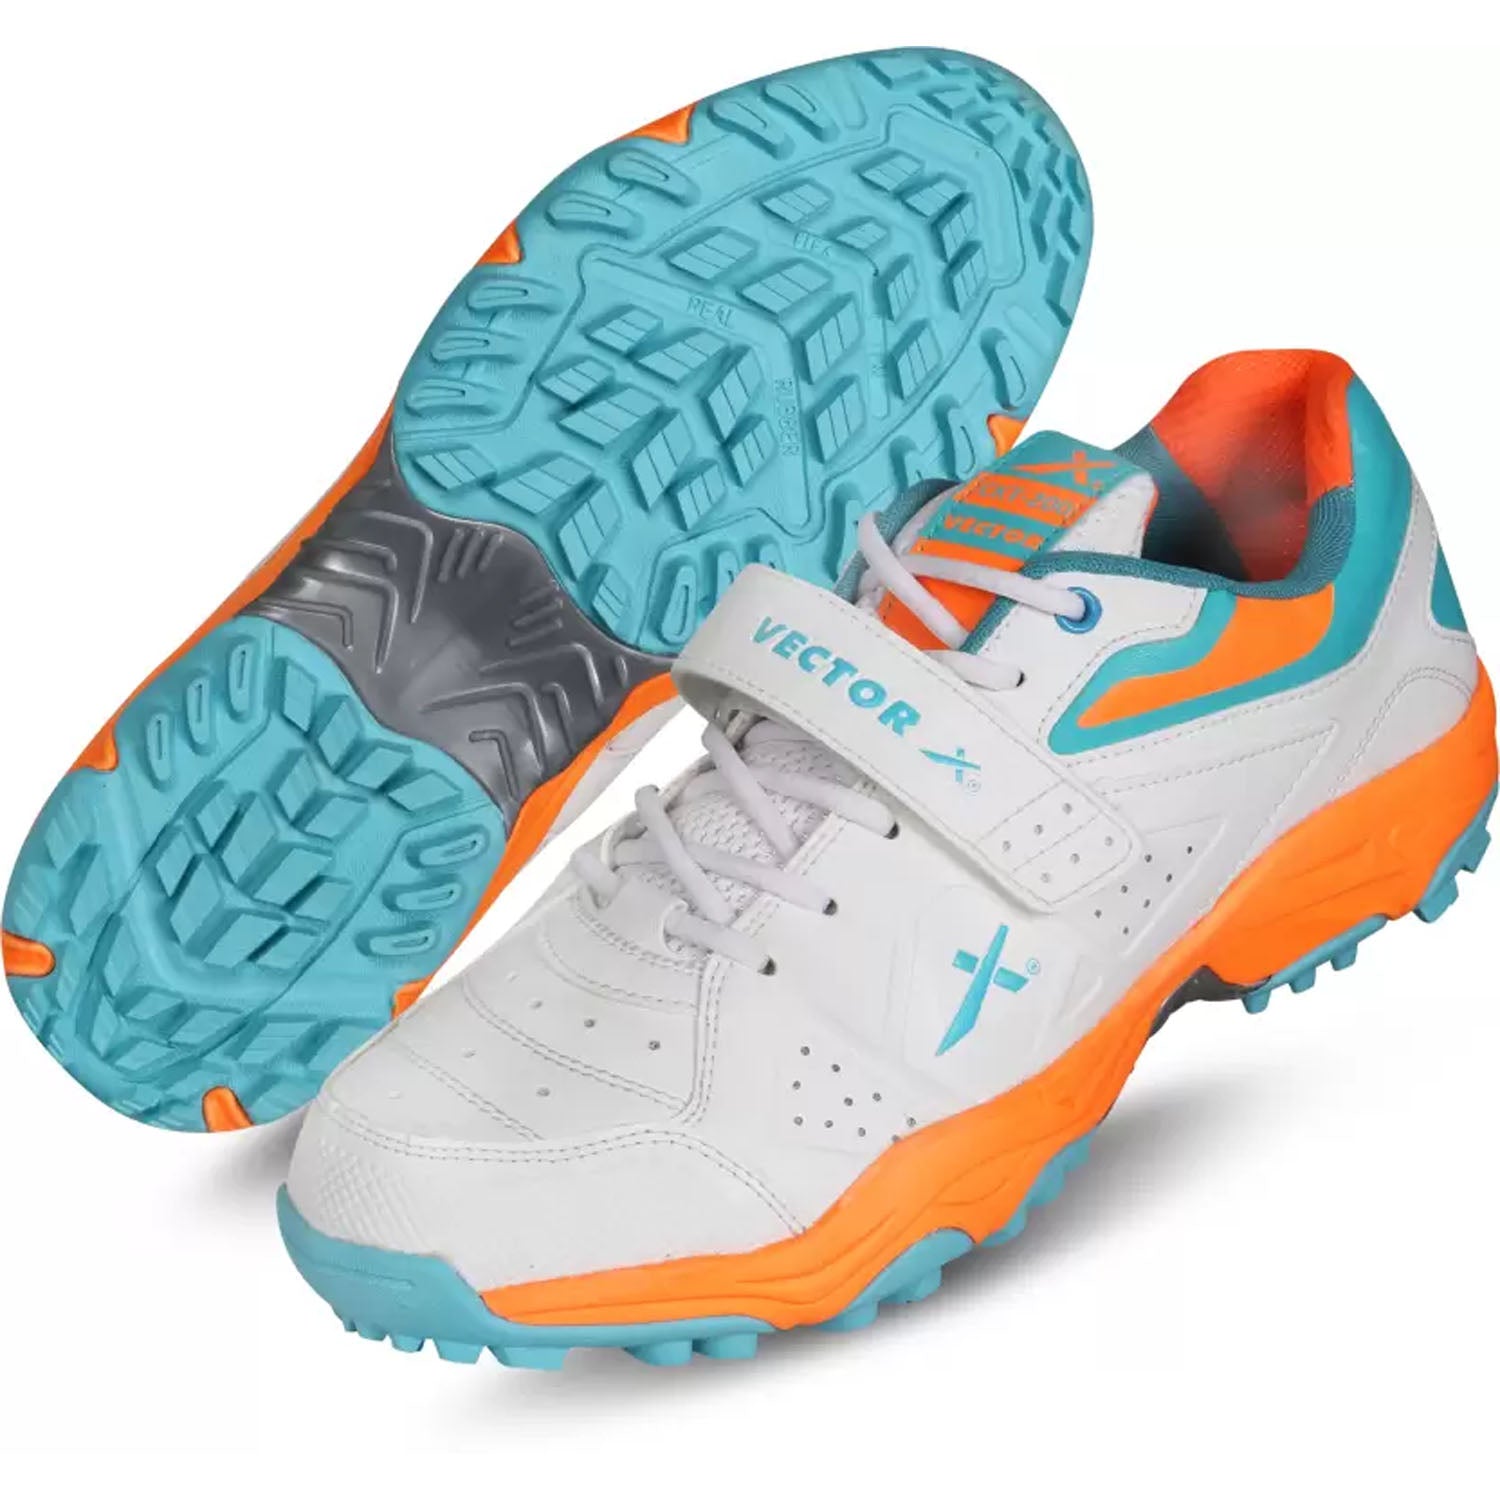 Vector X CKT-200 Mesh Cricket Shoes - Best Price online Prokicksports.com